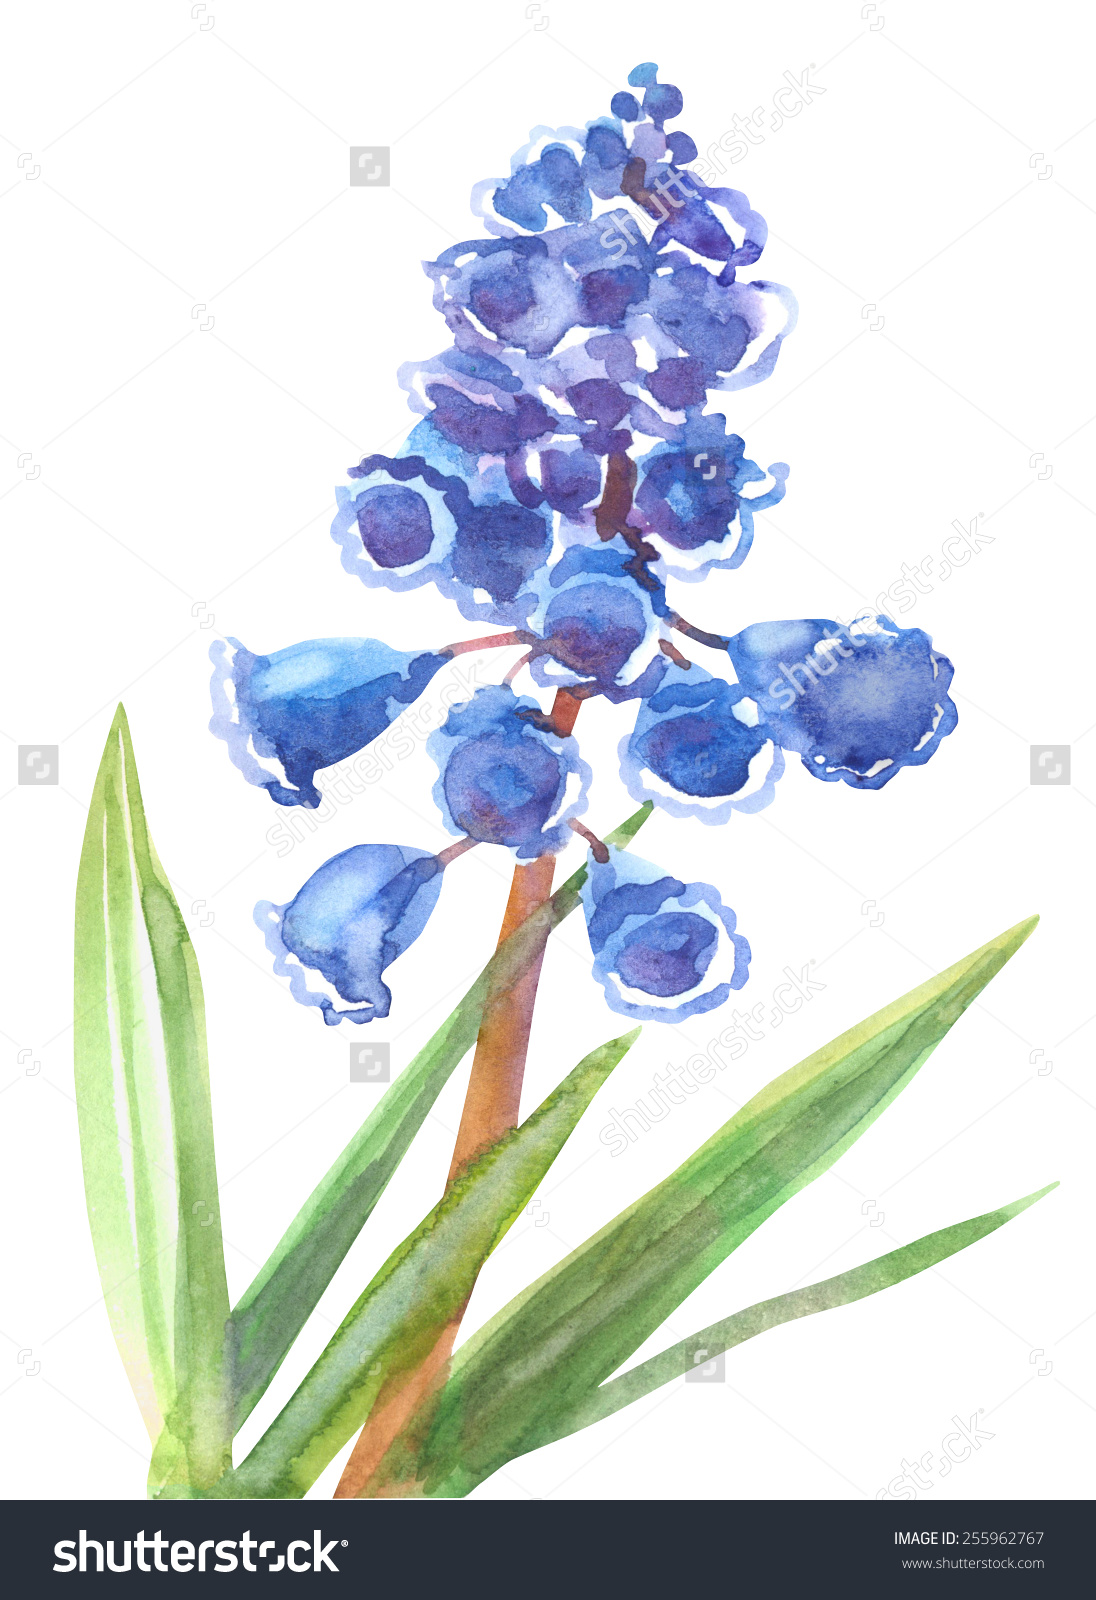 Grape Hyacinth clipart #14, Download drawings